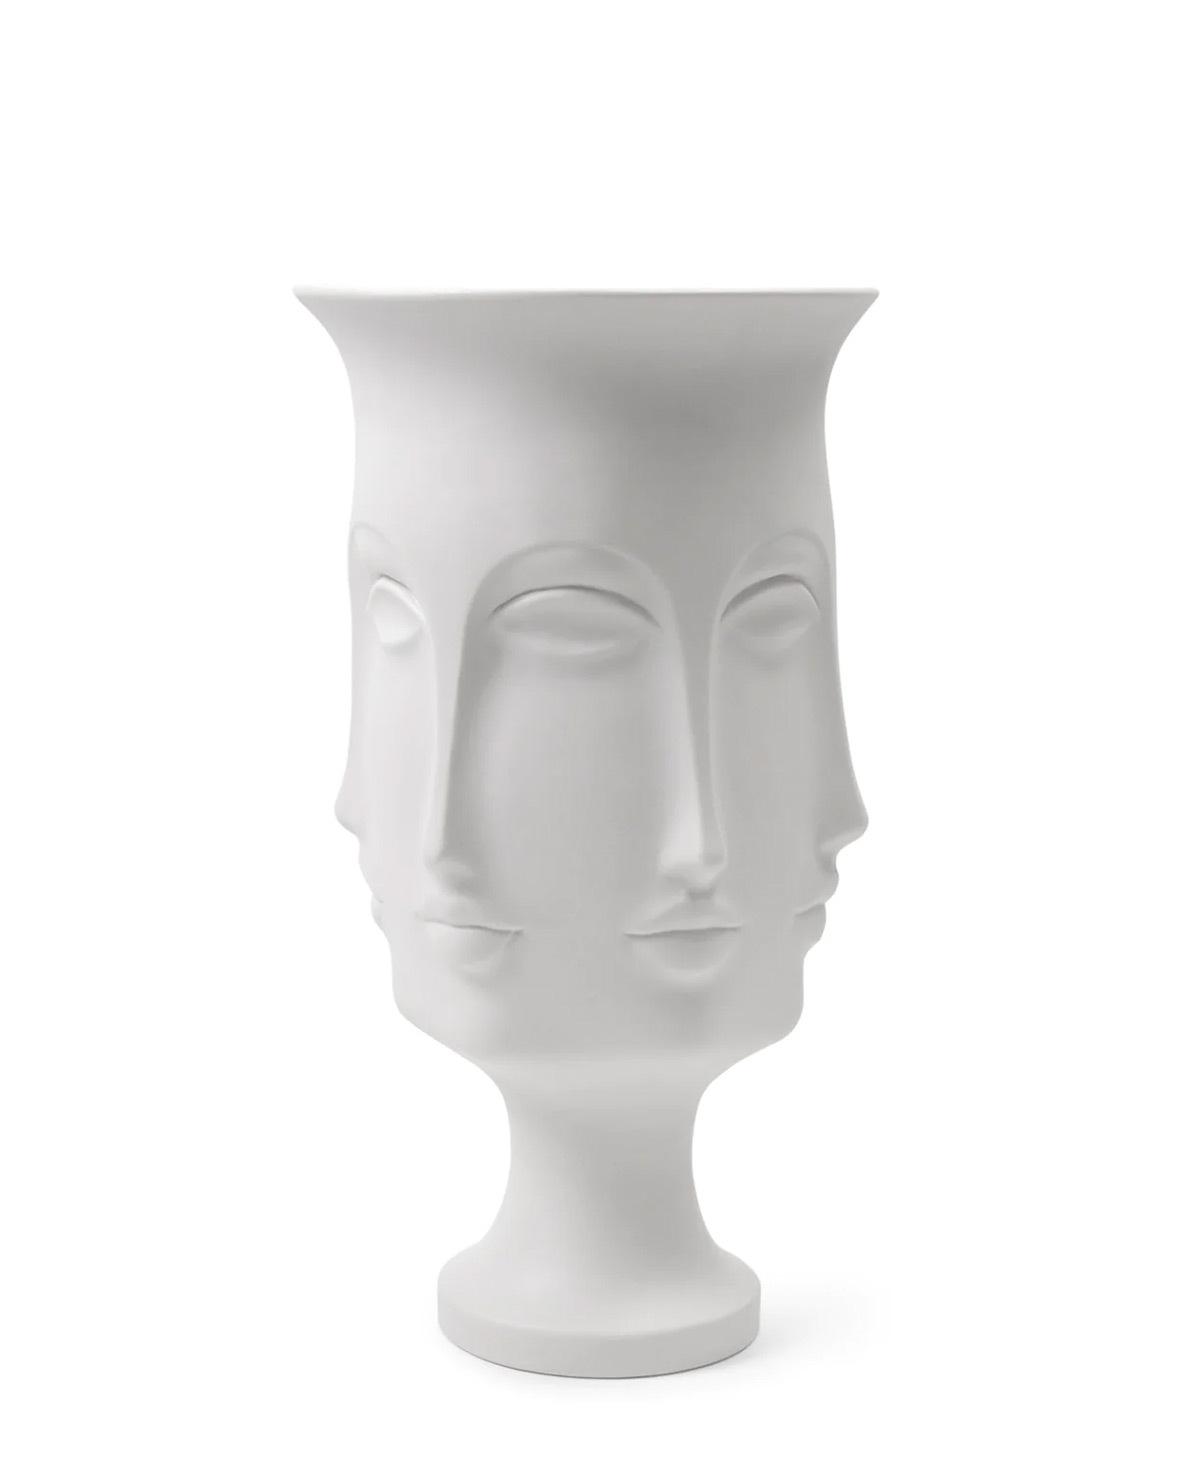 Vase Dora Maar Urn One Size